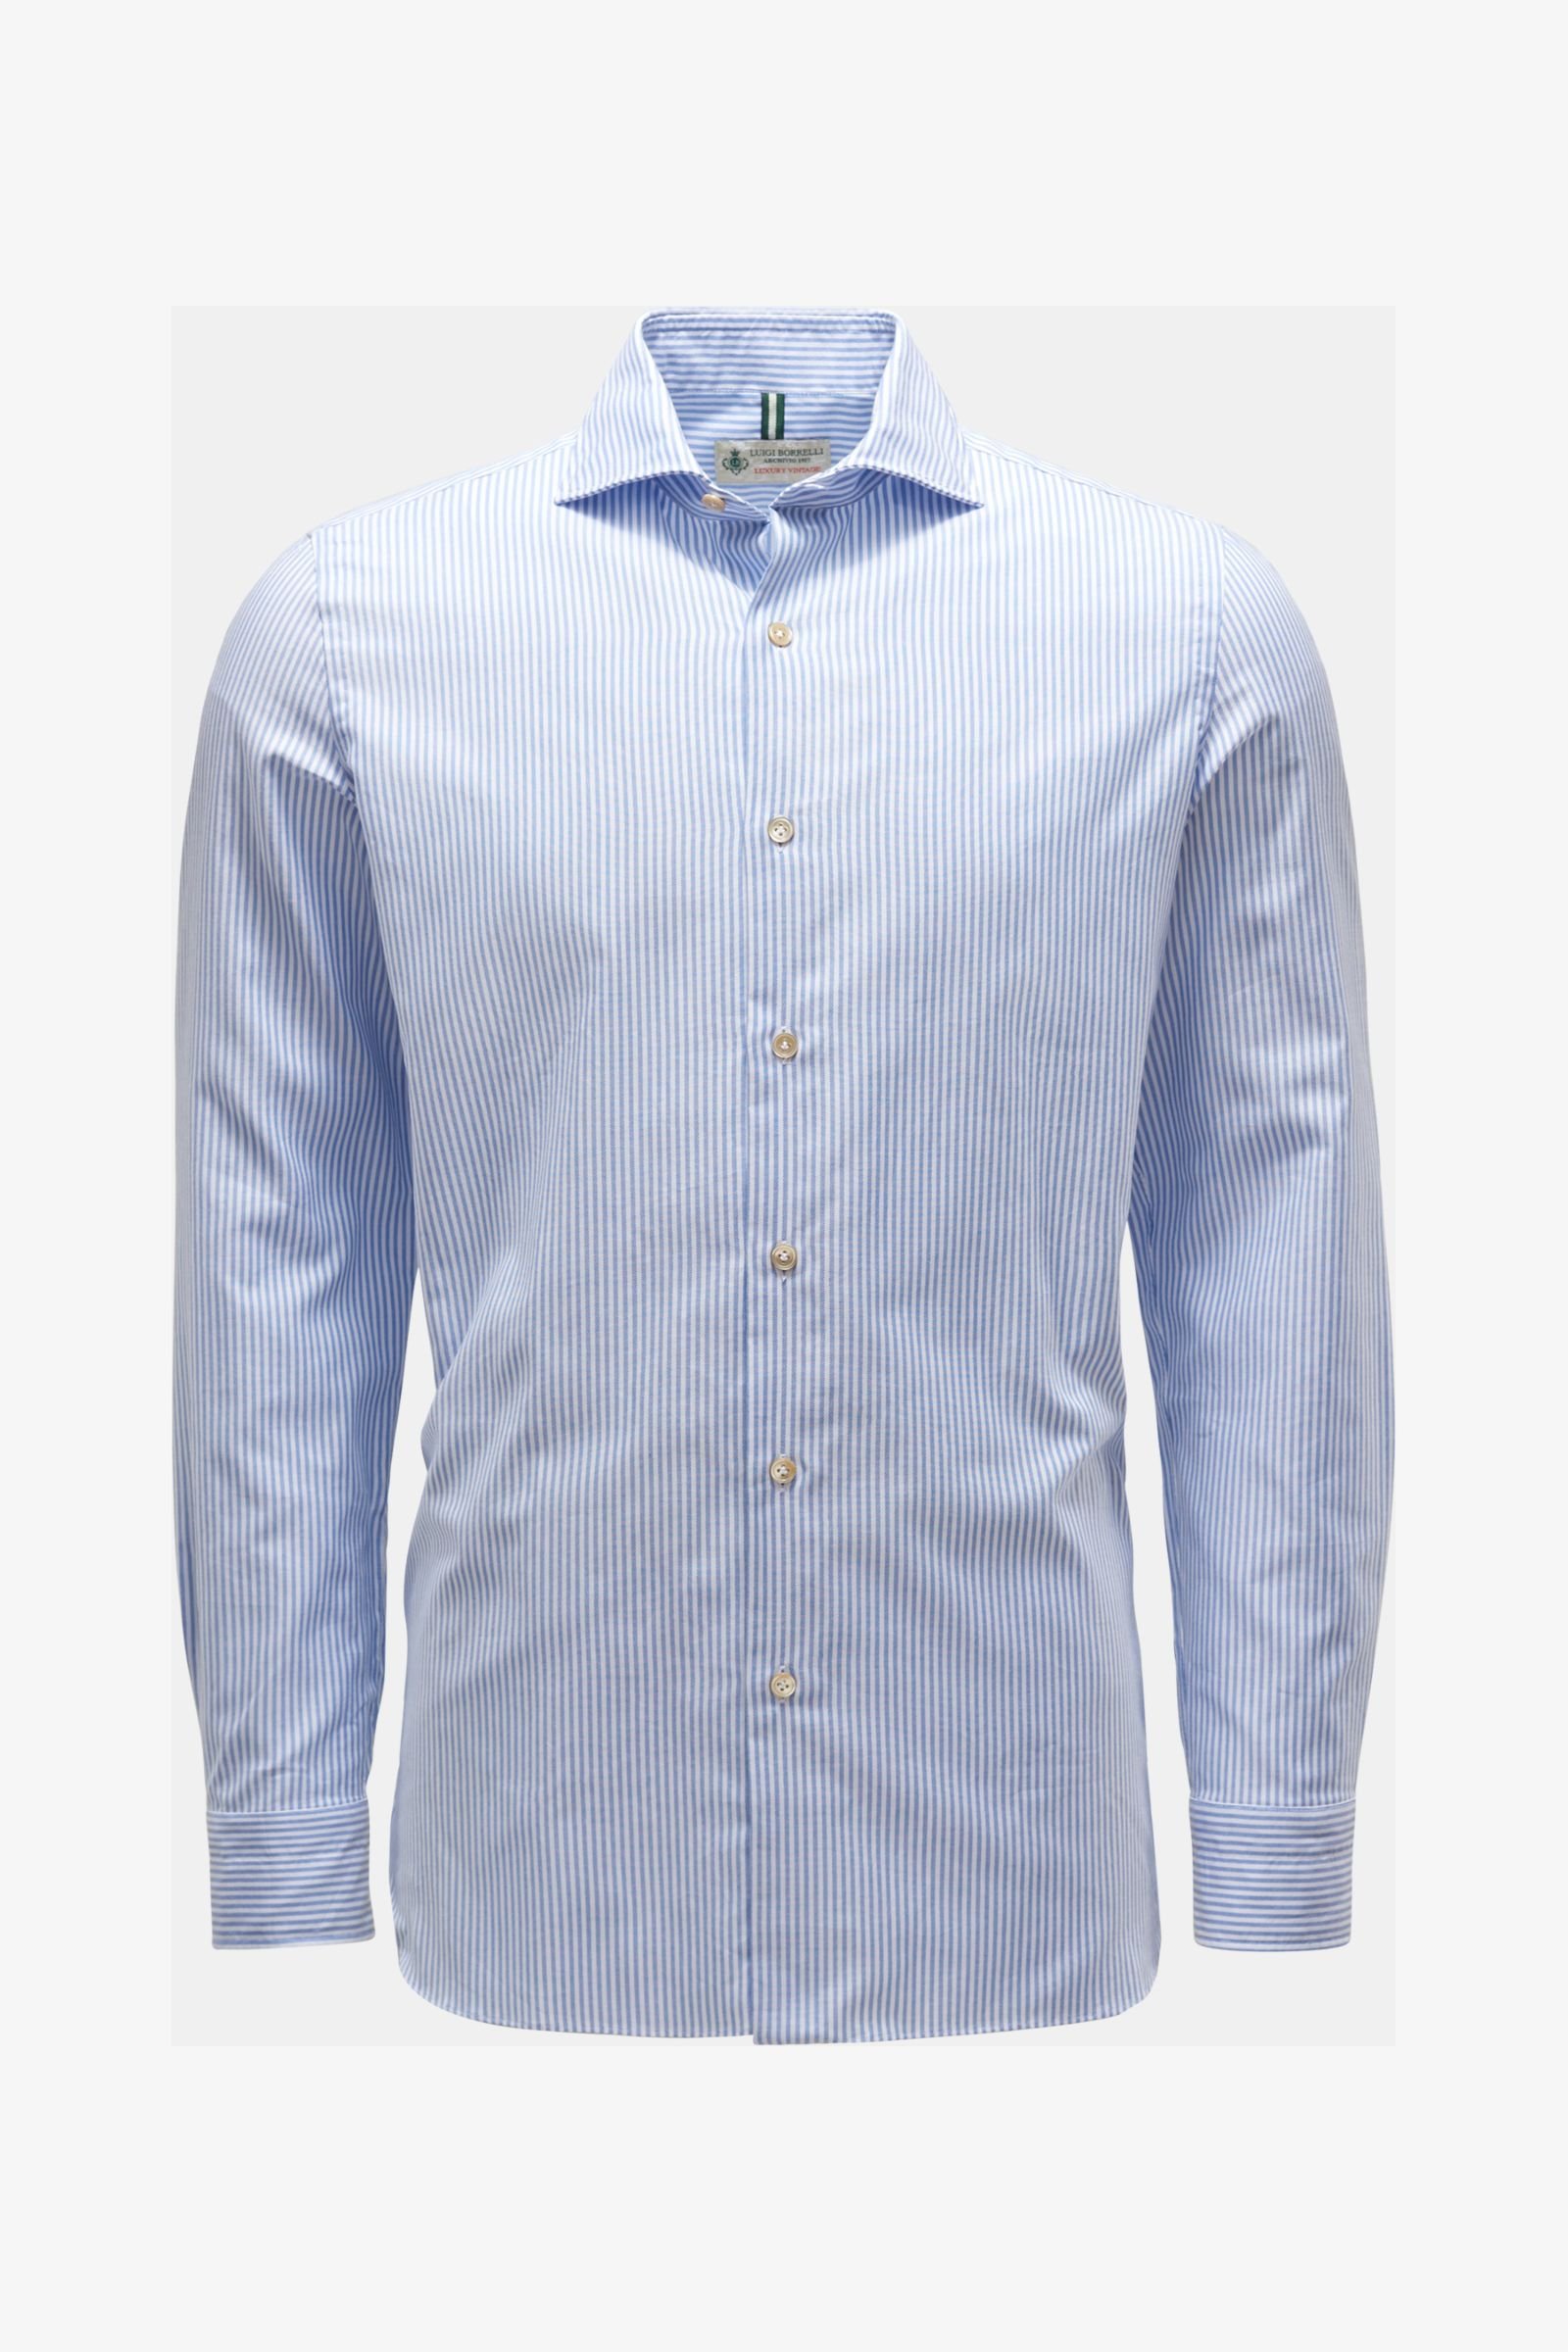 Oxford shirt 'Nando' shark collar smoky blue/white striped